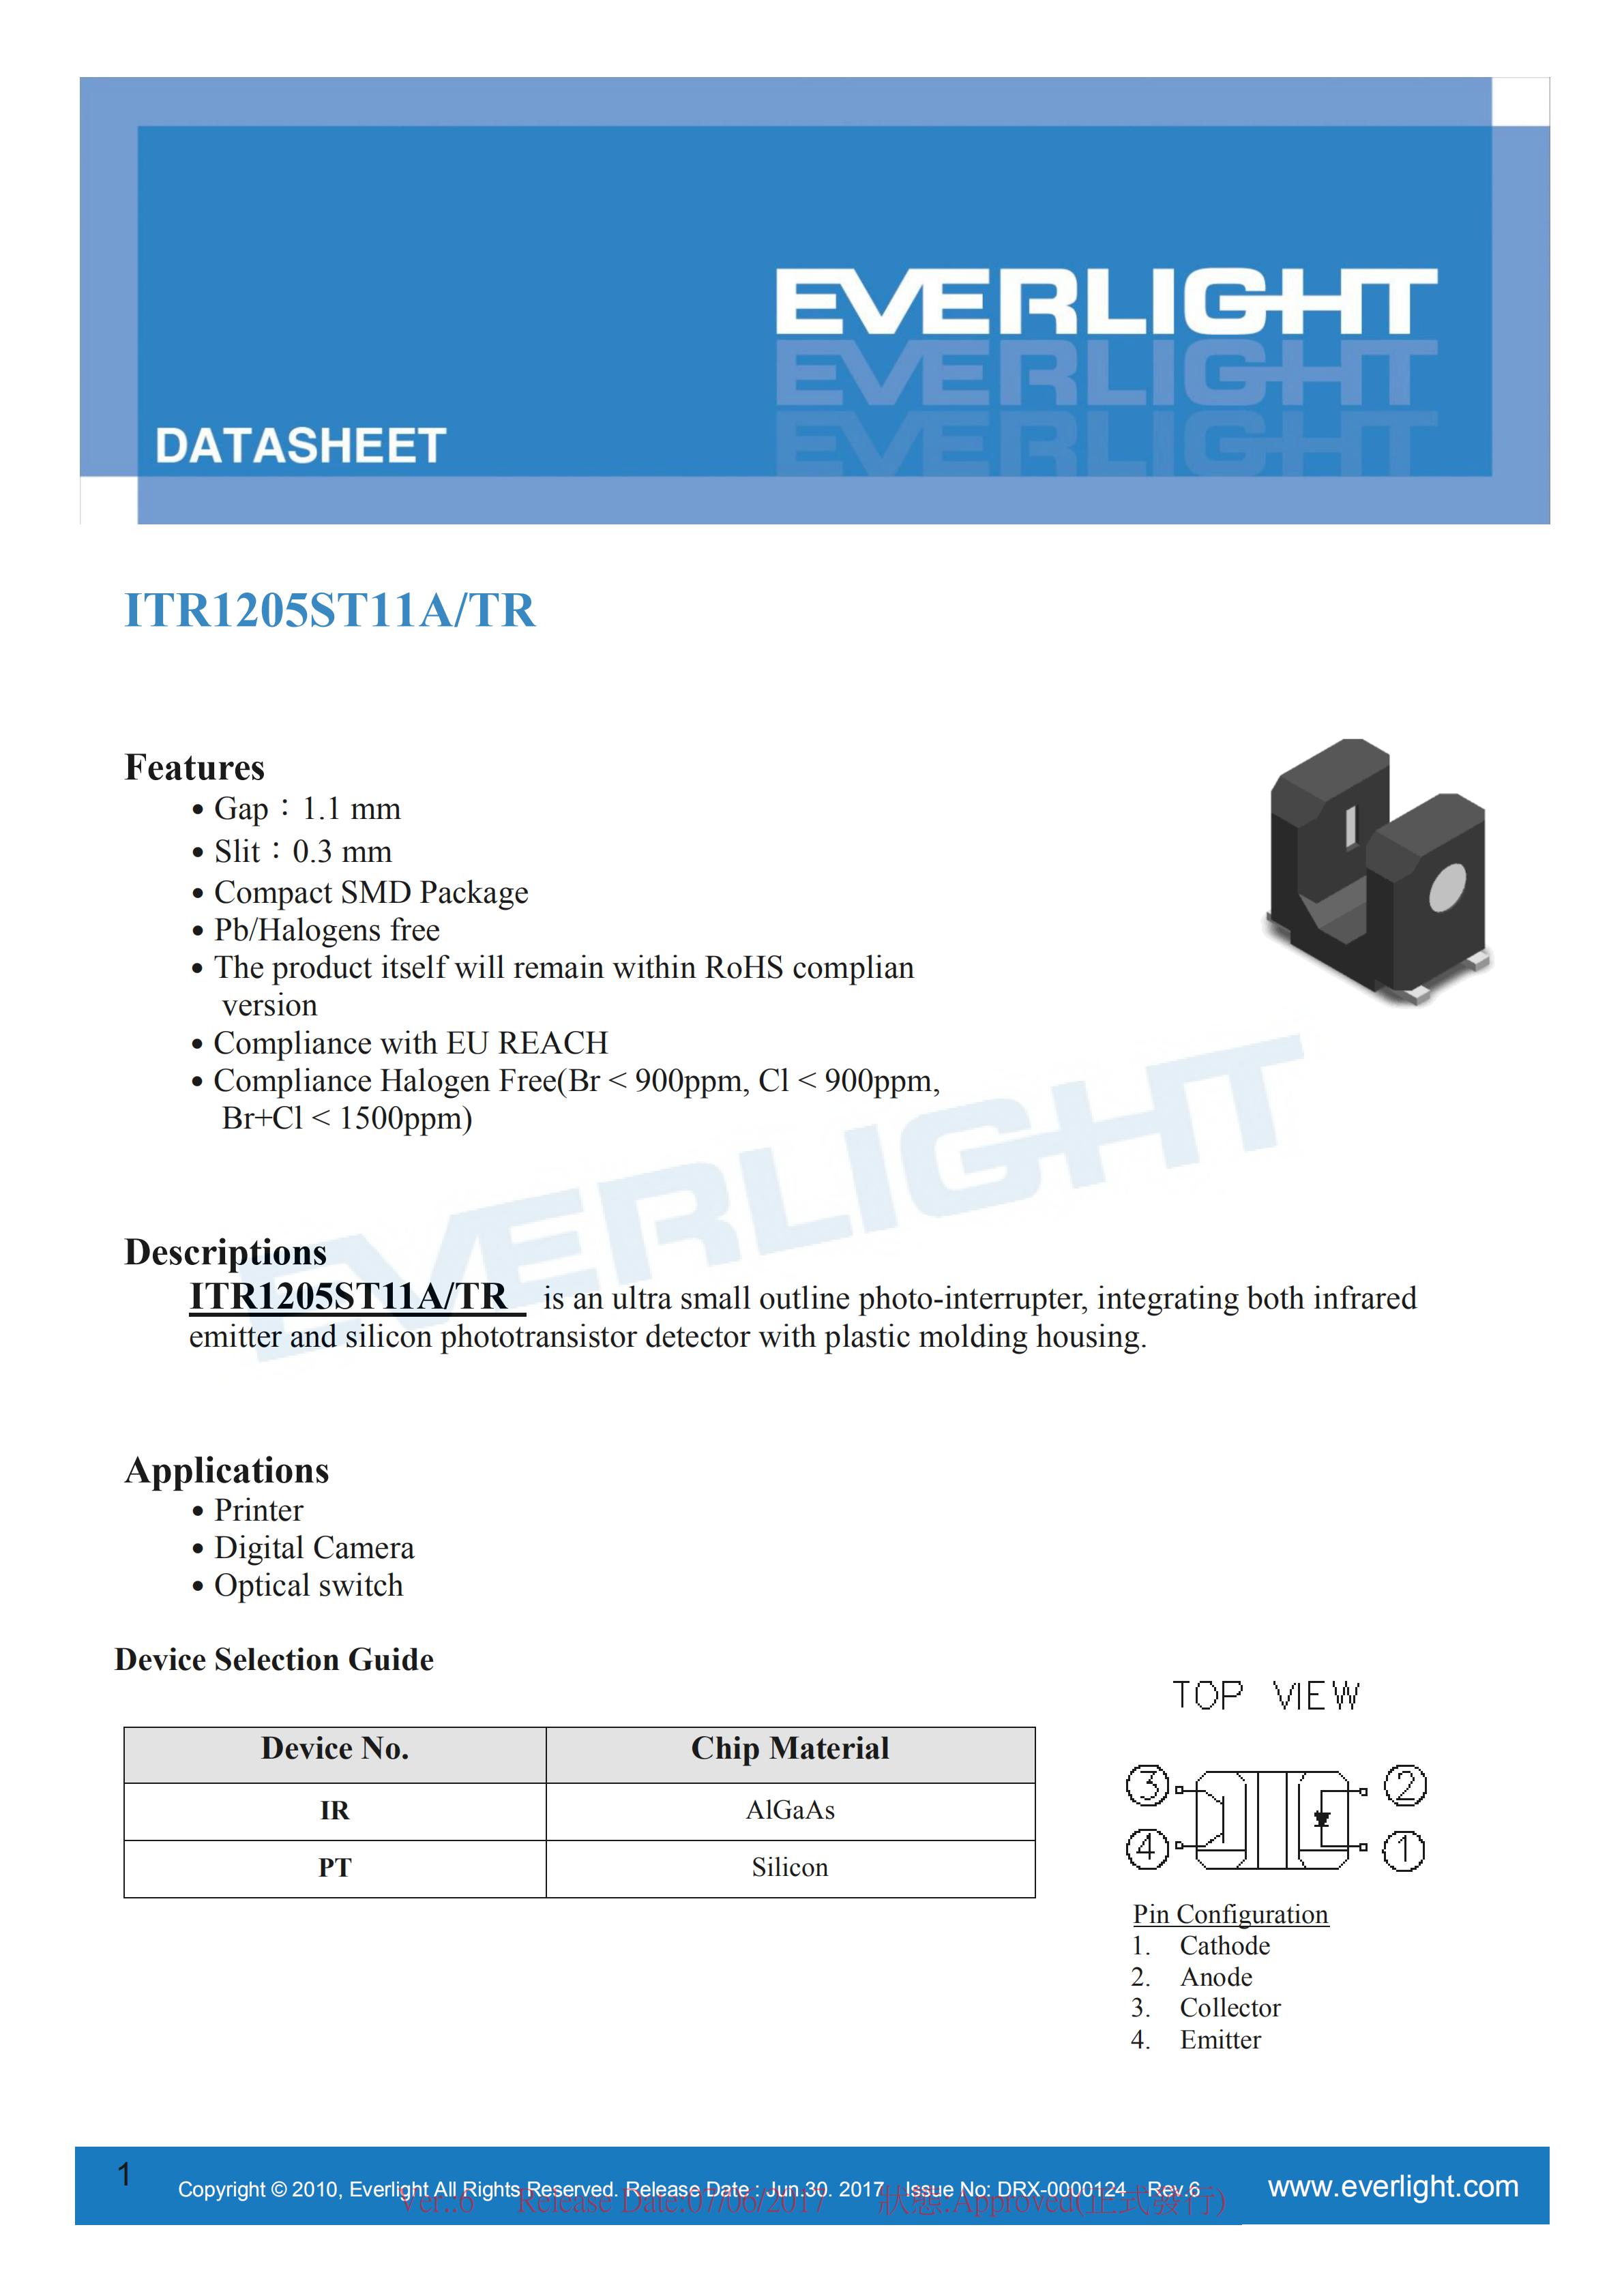 EVERLIGHT Optical Switch ITR1205ST11A/TR Opto Interrupter Datasheet